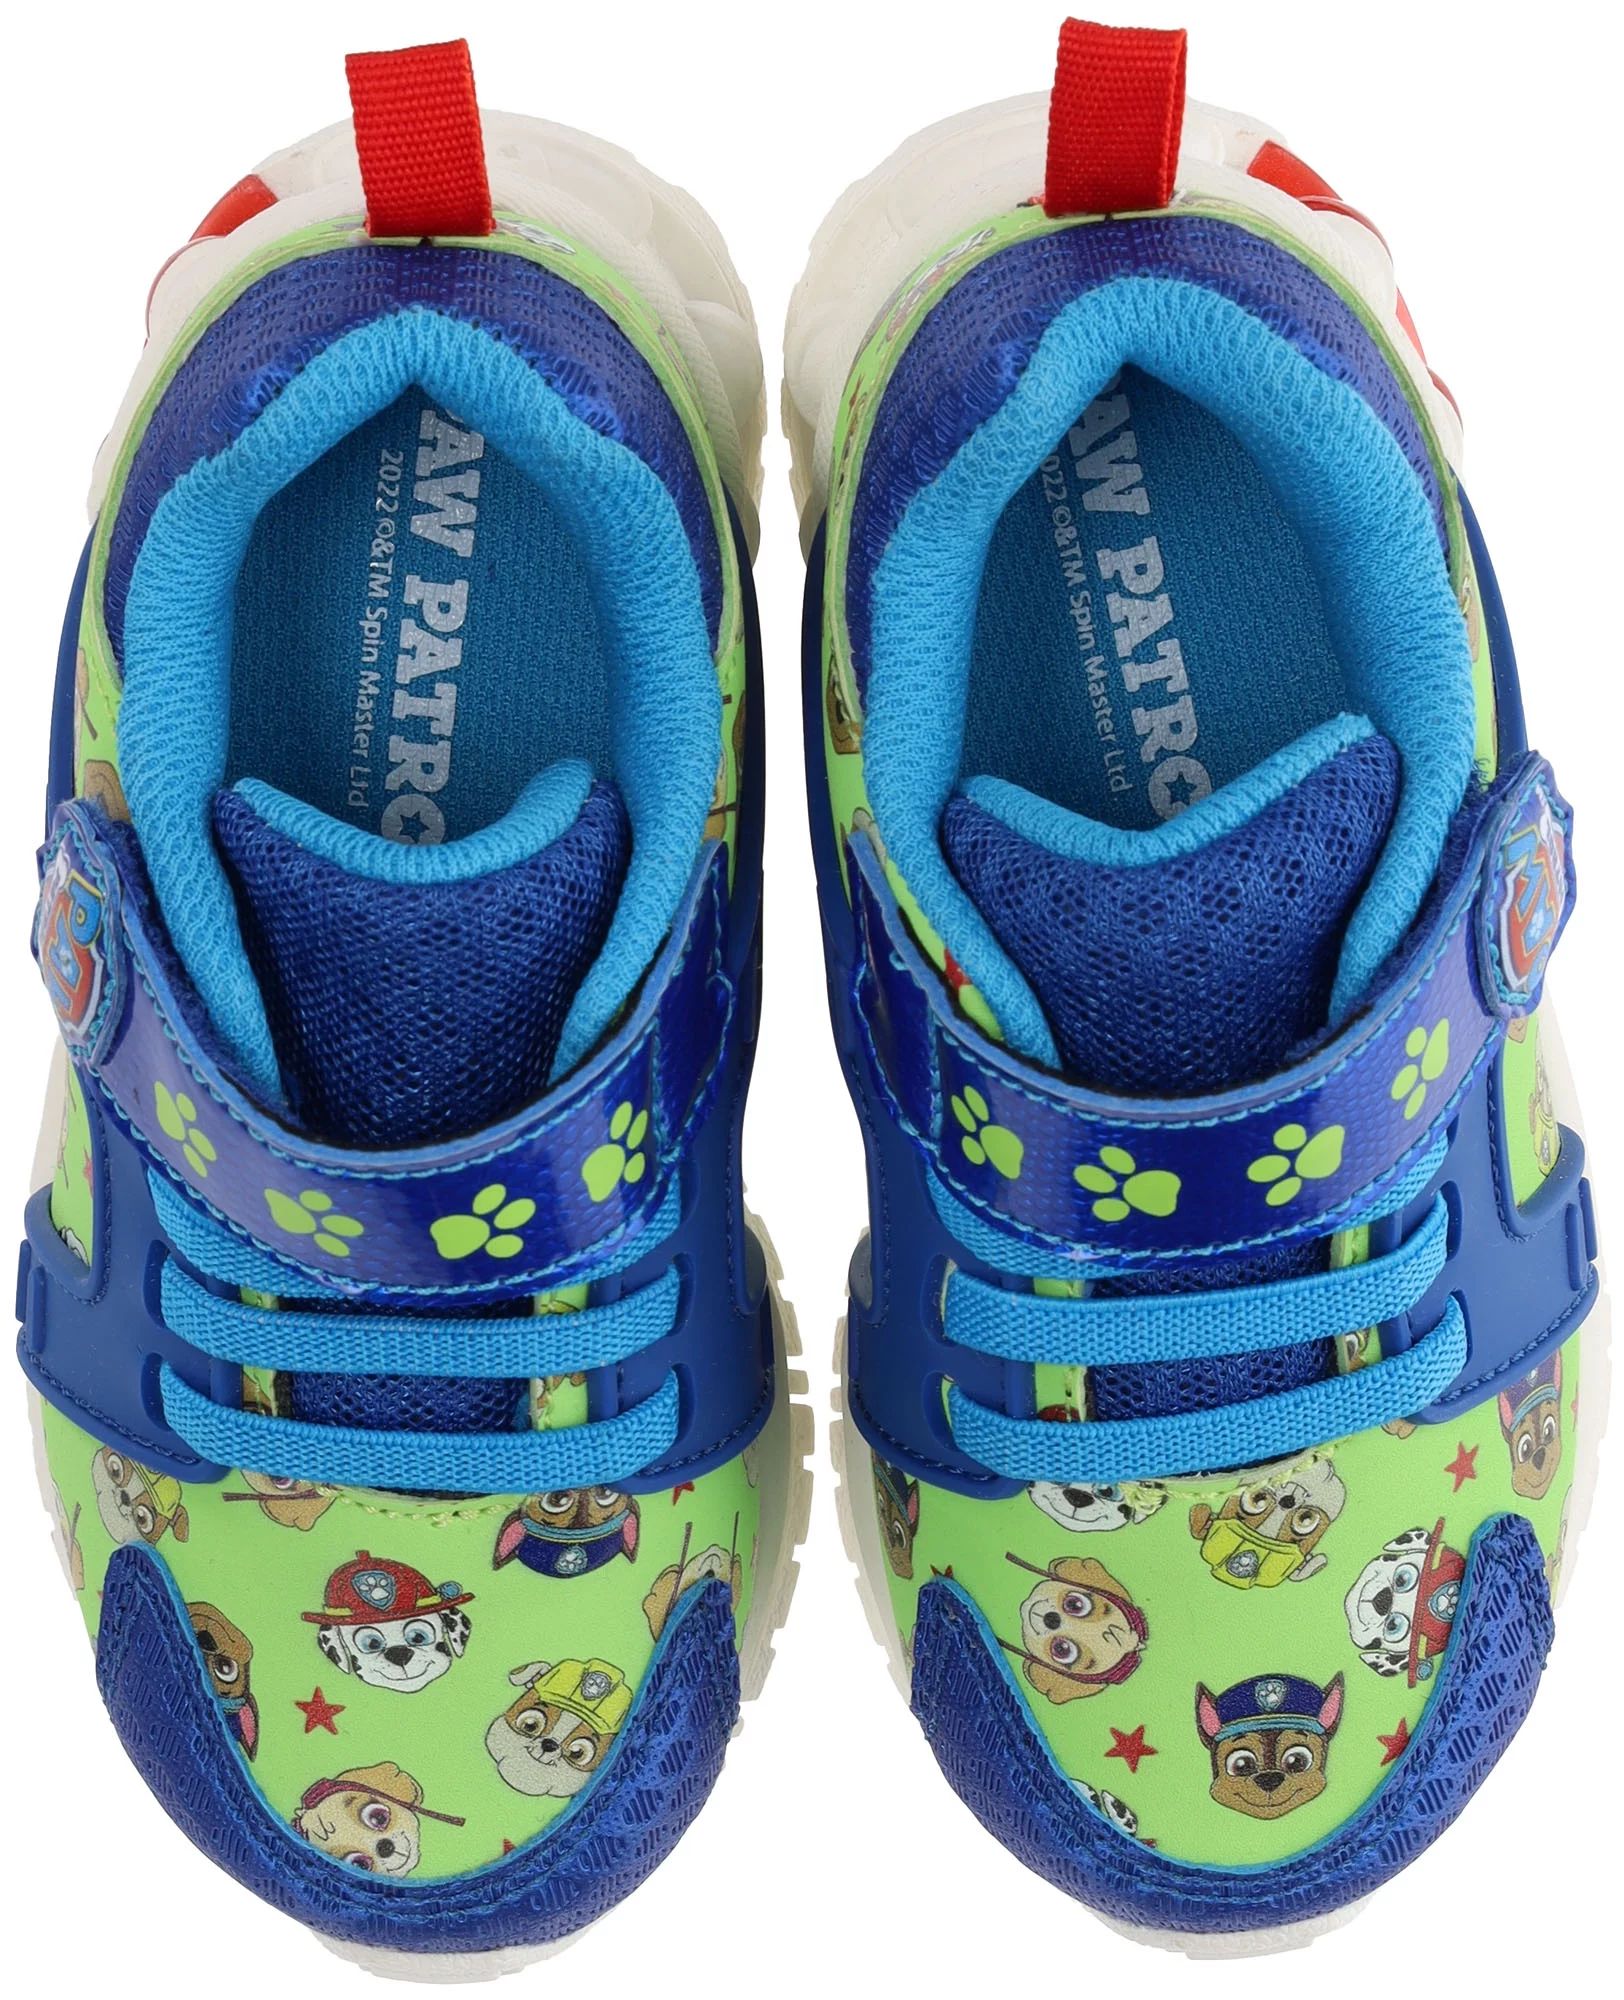 Paw Patrol Sneakers for Kids, Light-Up Runner, Blue/Green, Toddler Size 9 | Walmart (US)